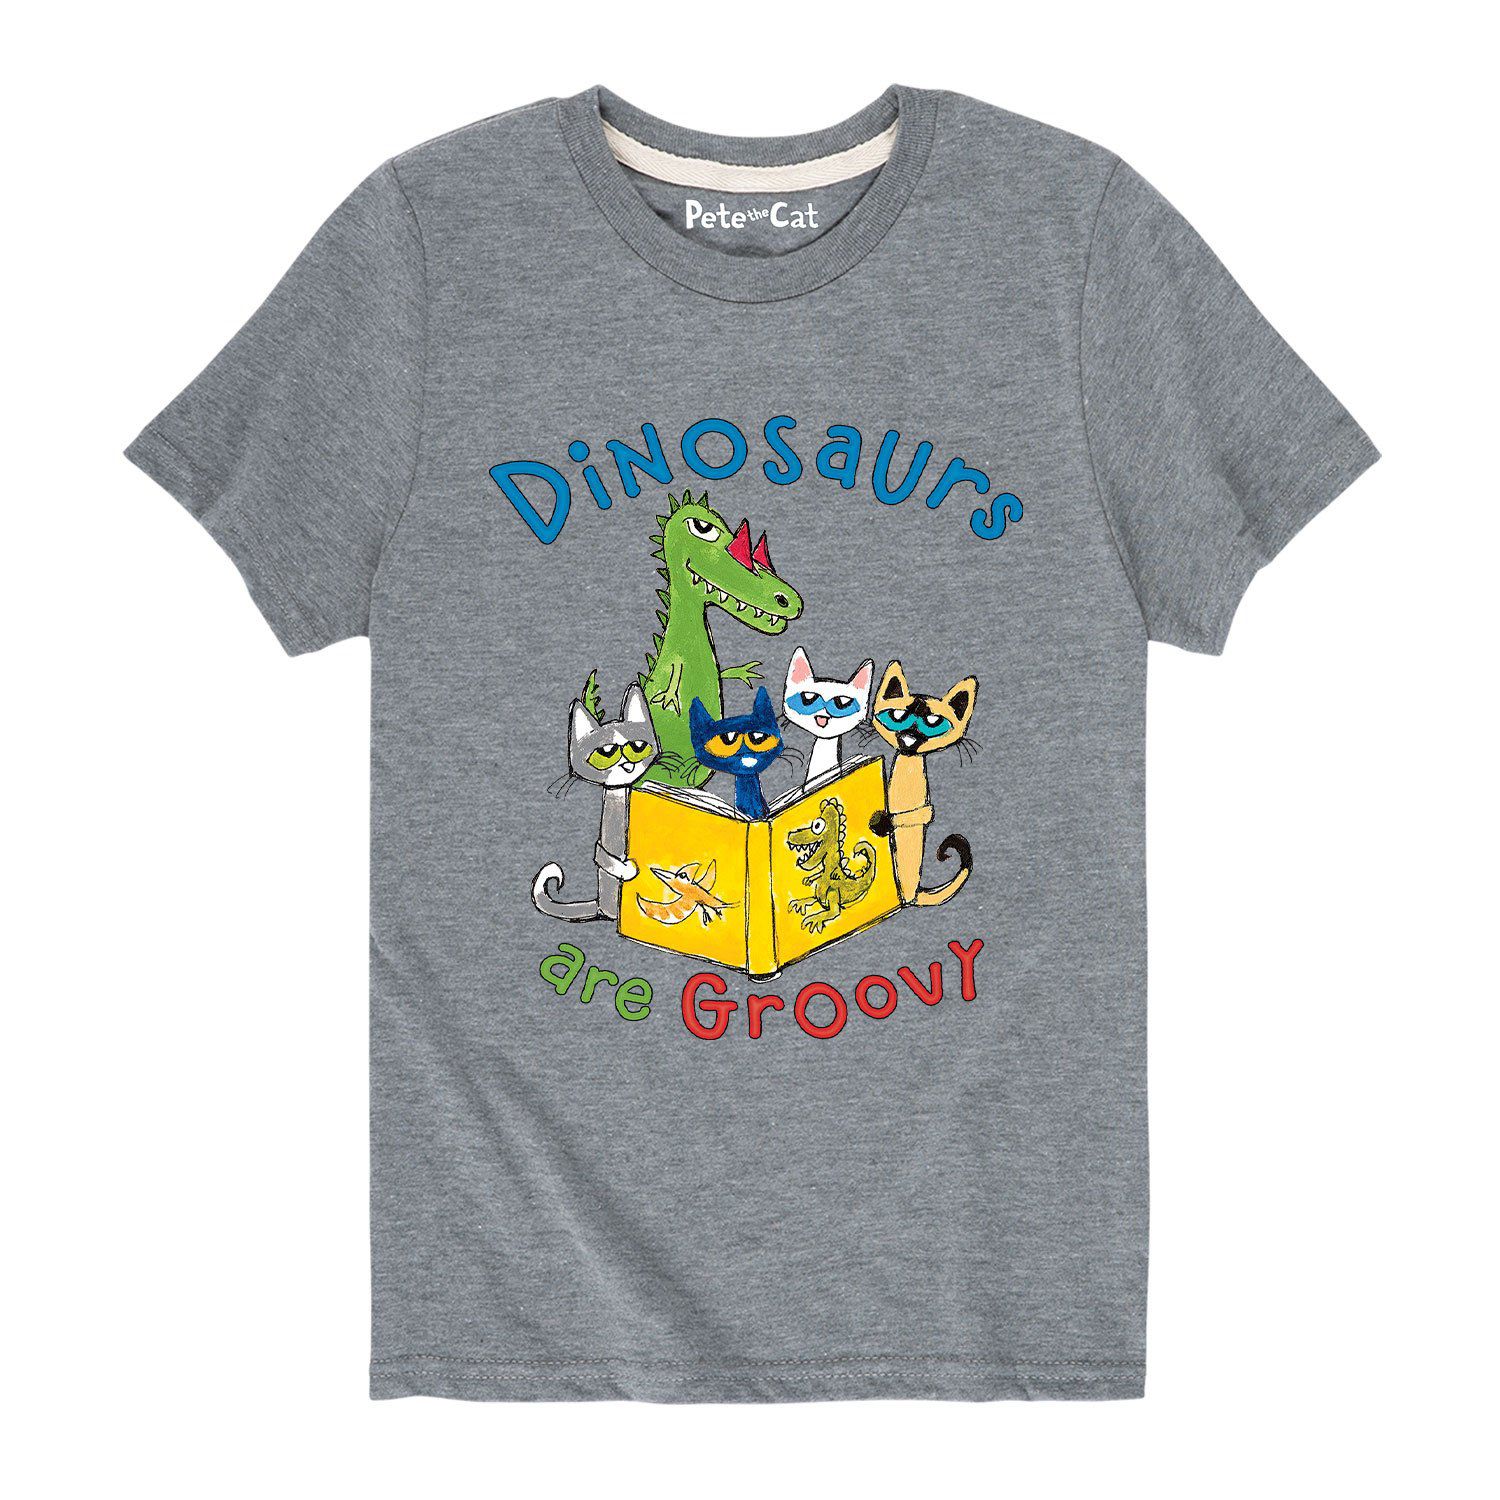 Футболка с рисунком динозавров Pete The Cat для мальчиков 8–20 лет Licensed Character футболка groovy с рисунком pete the cat для мальчиков 8–20 лет licensed character